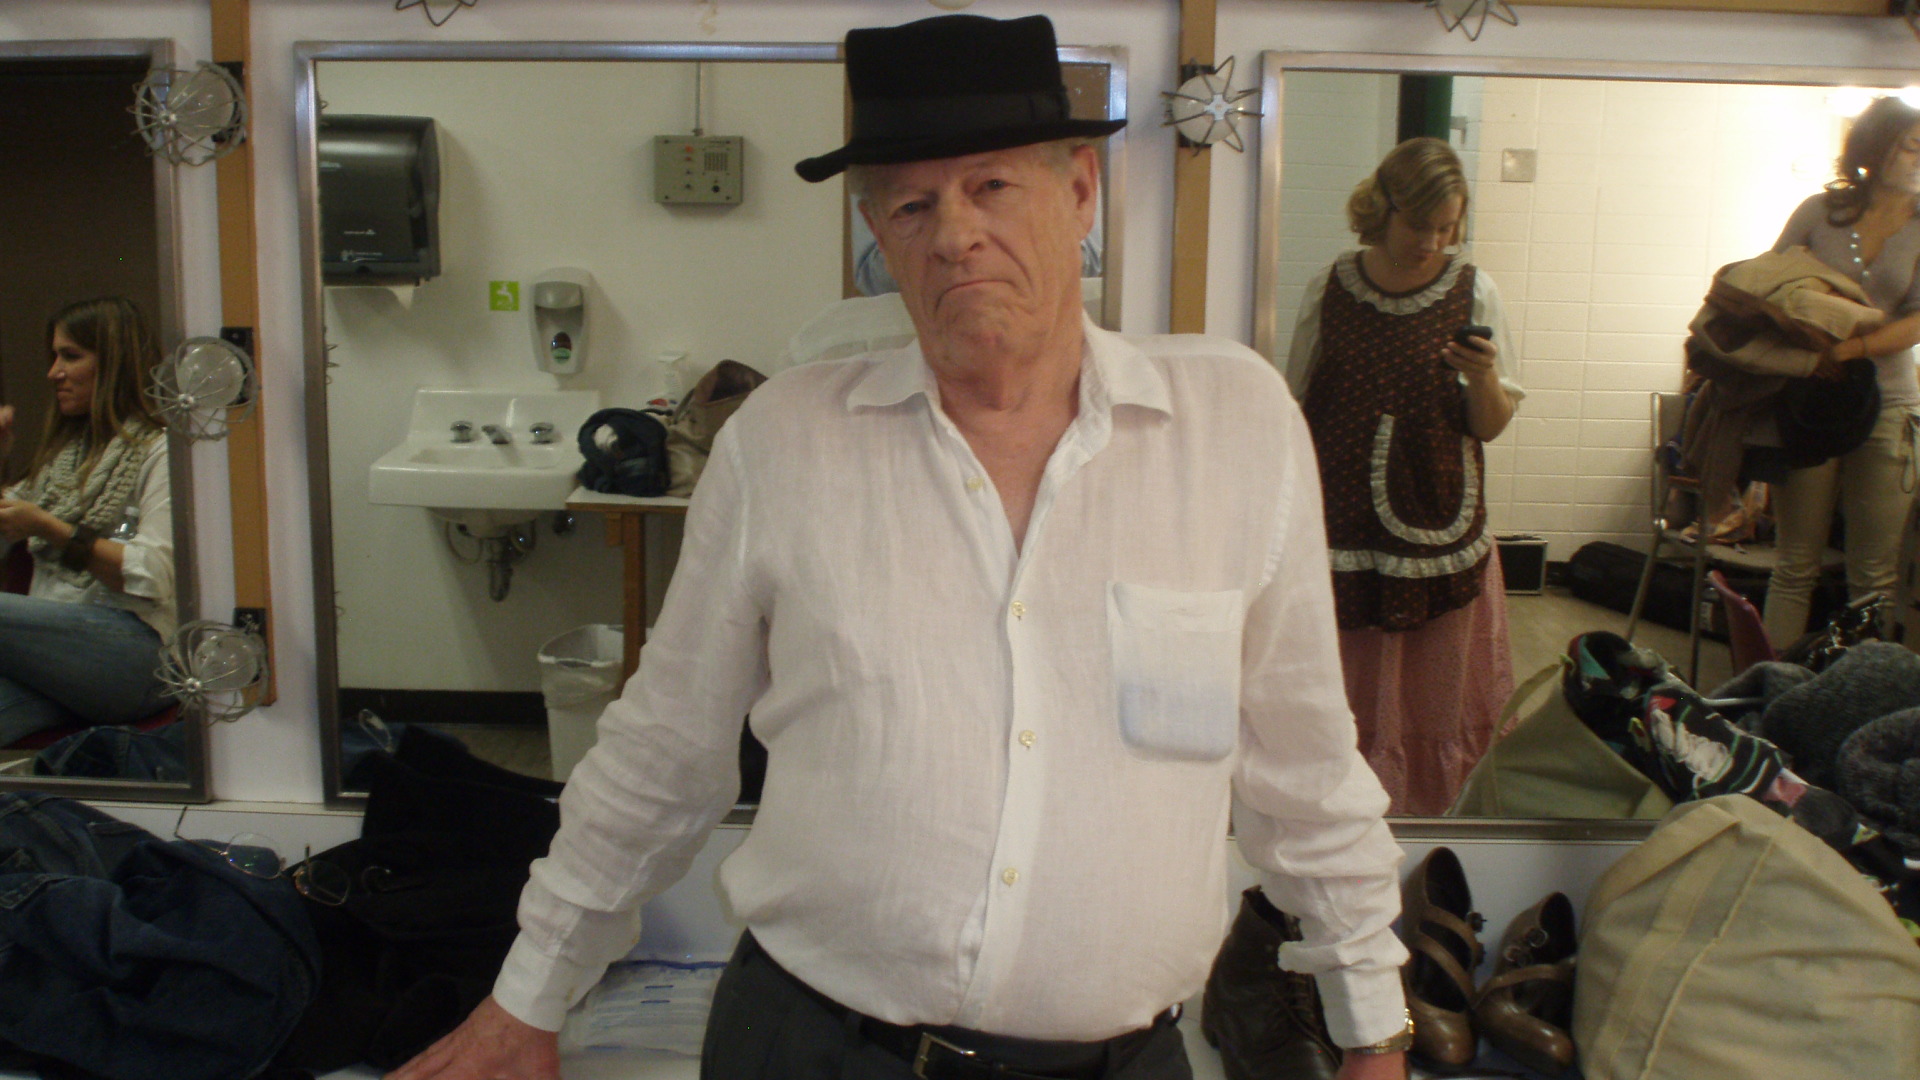 Okie Grandpa - The Holyland, November 2012